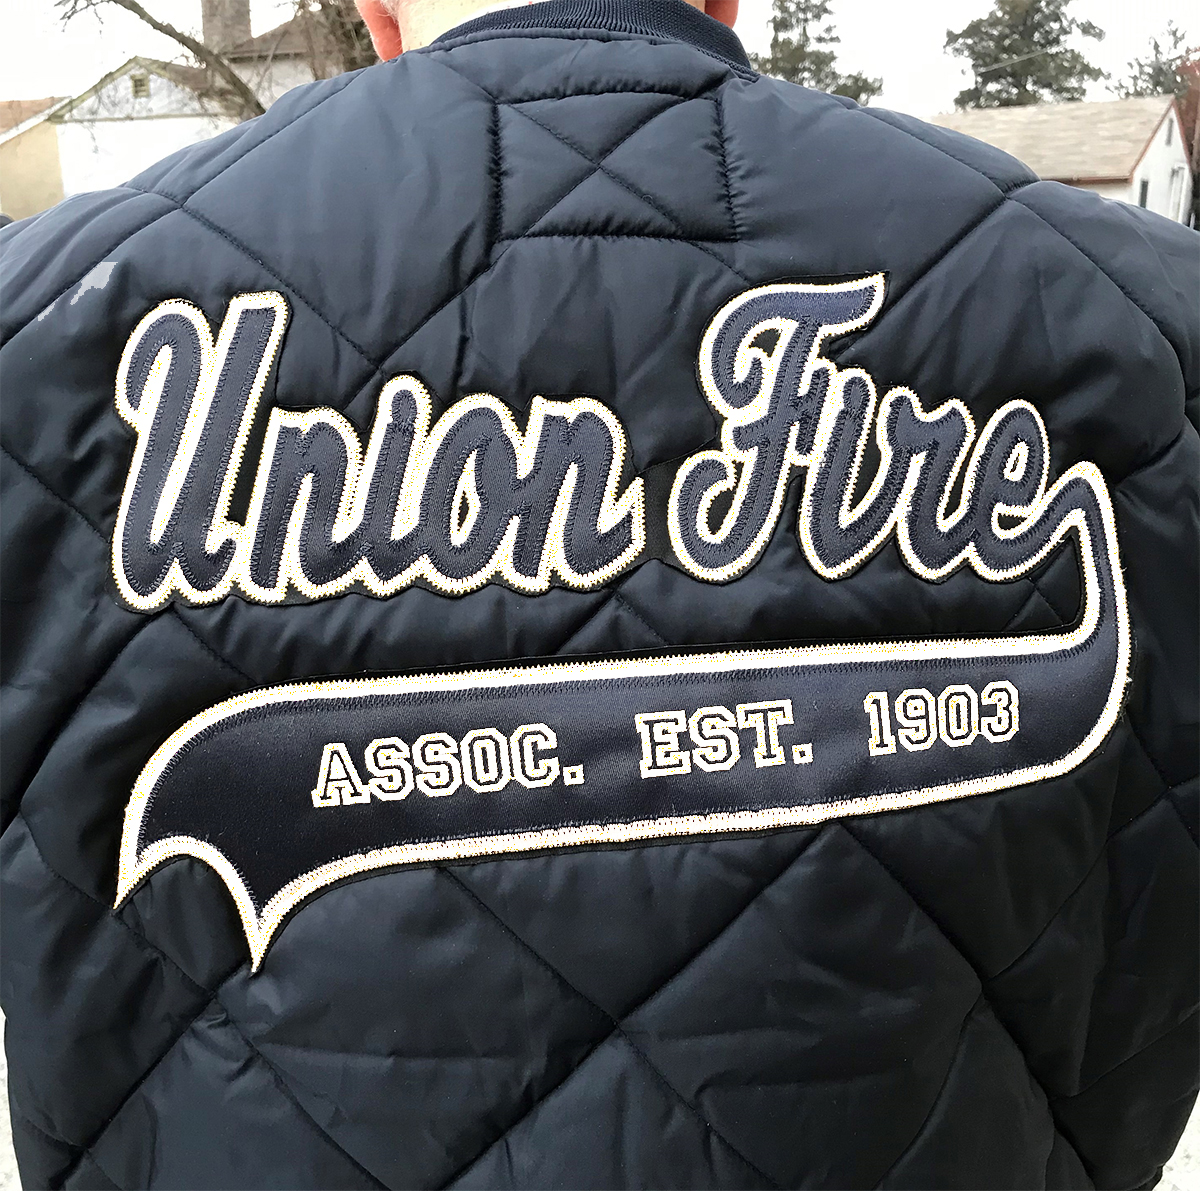 Union Fire Association